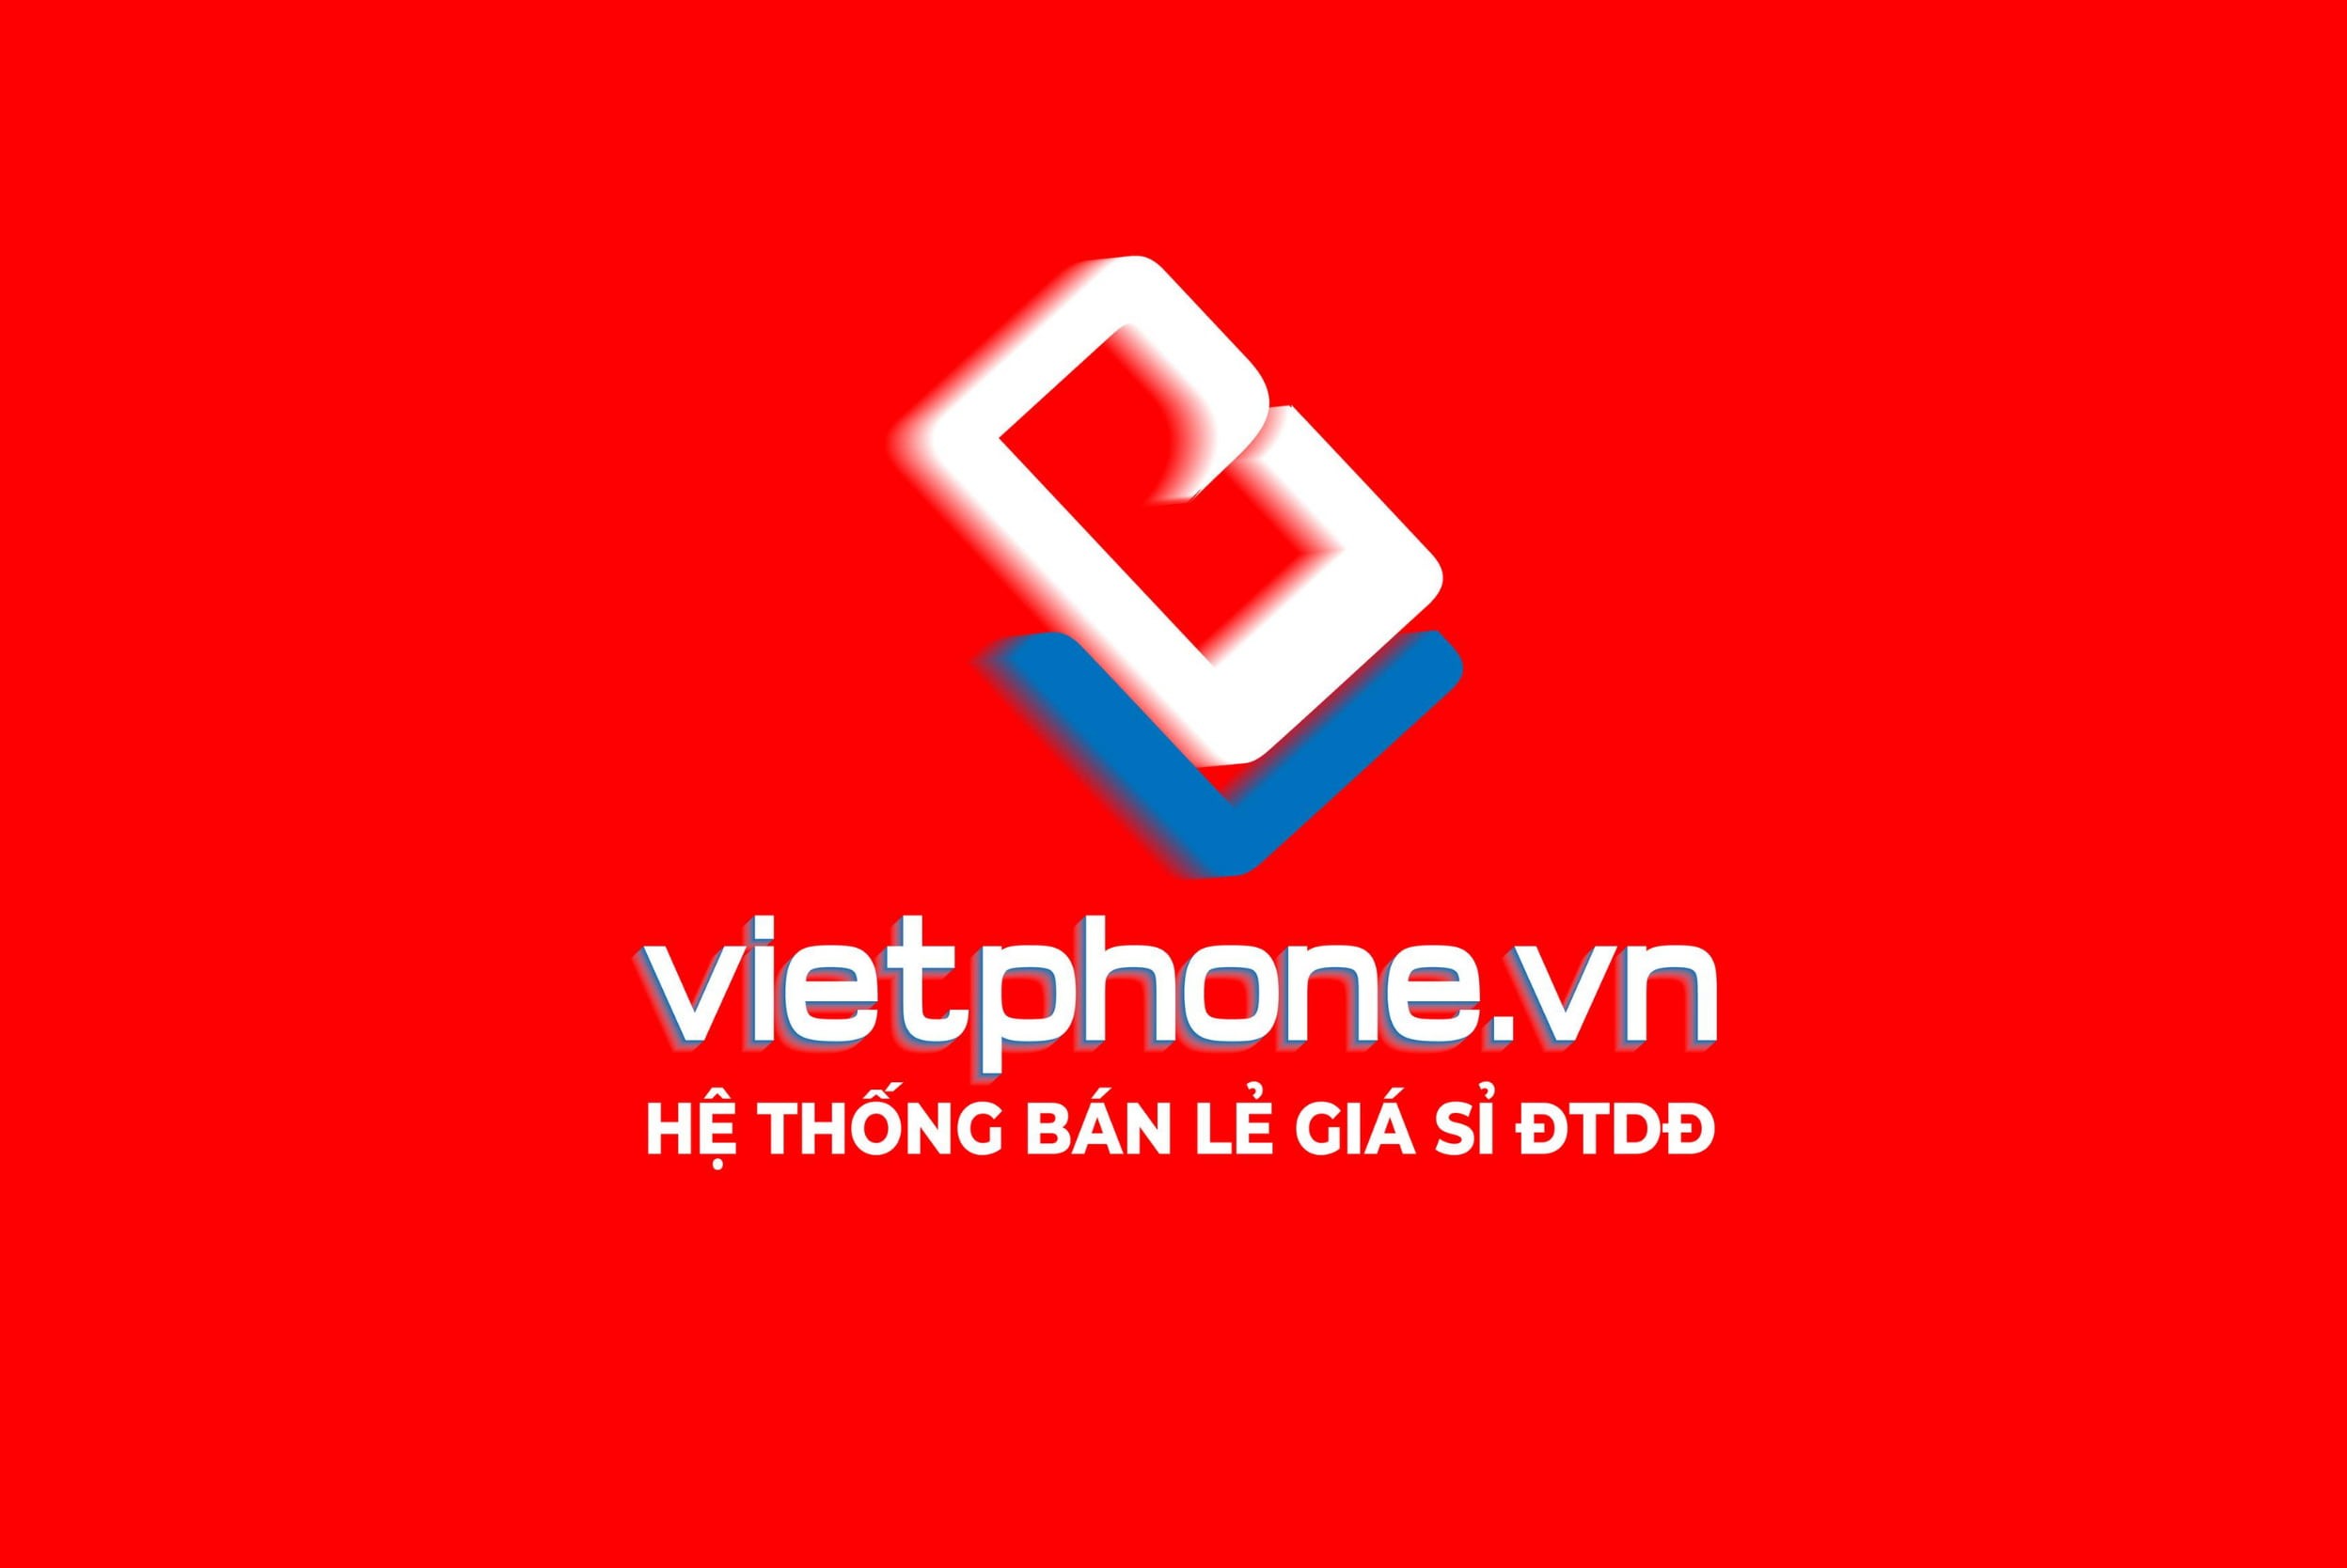 Vietphonevn-logo